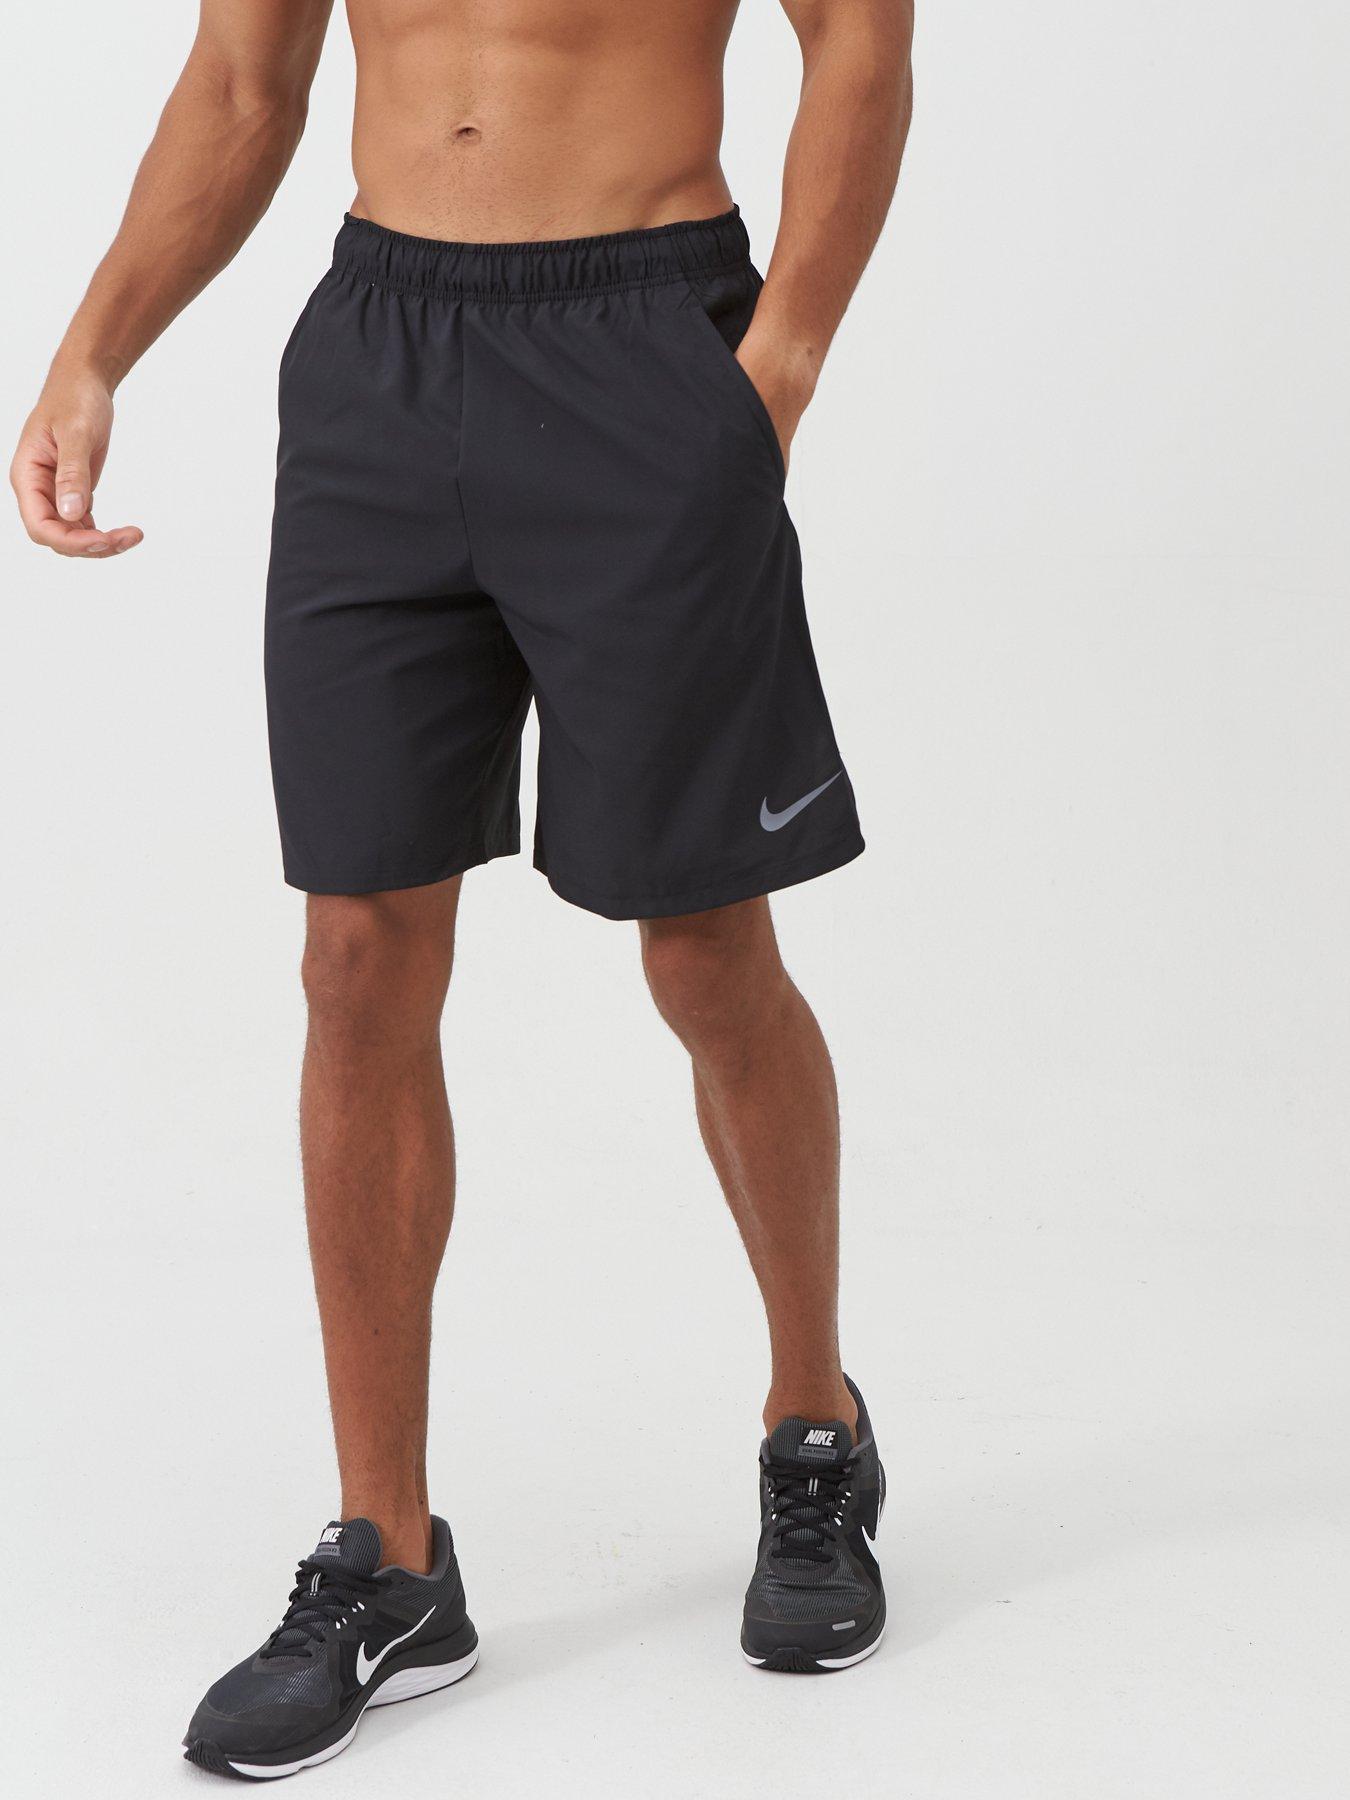 nike men's flex woven shorts 2.0